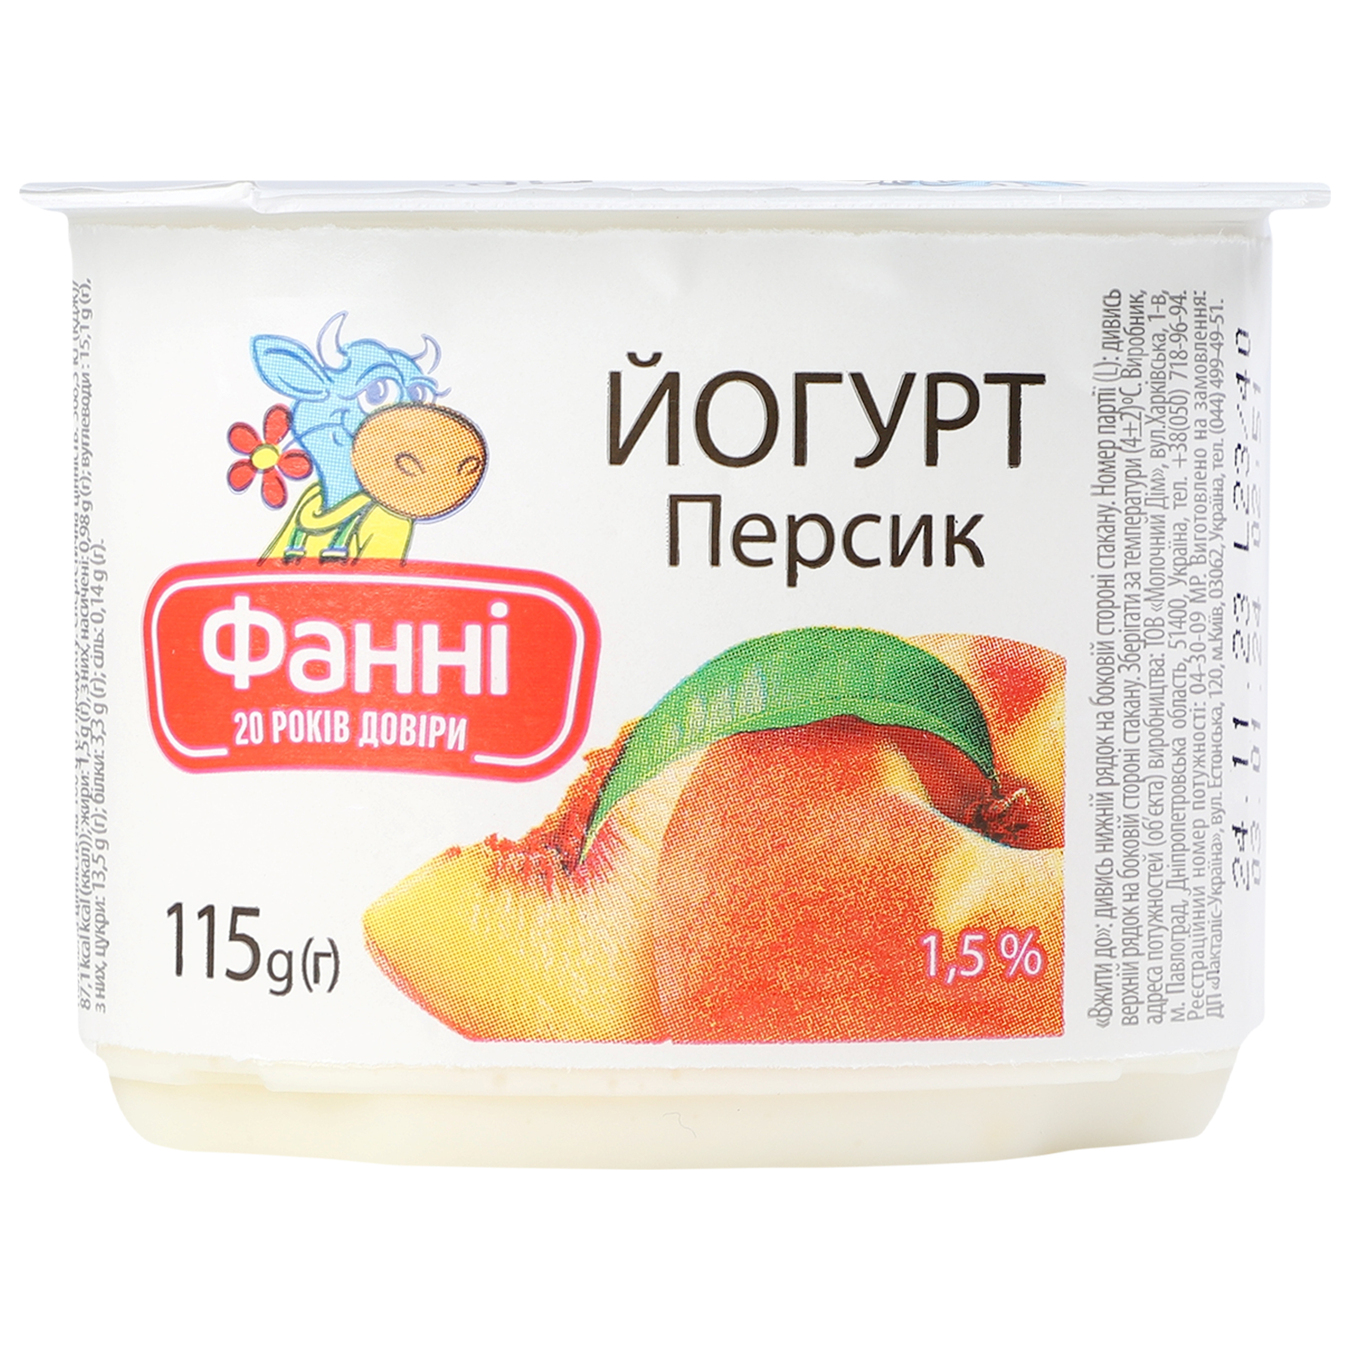 Fanny yogurt with peach filling cup 1.5% 115g 4